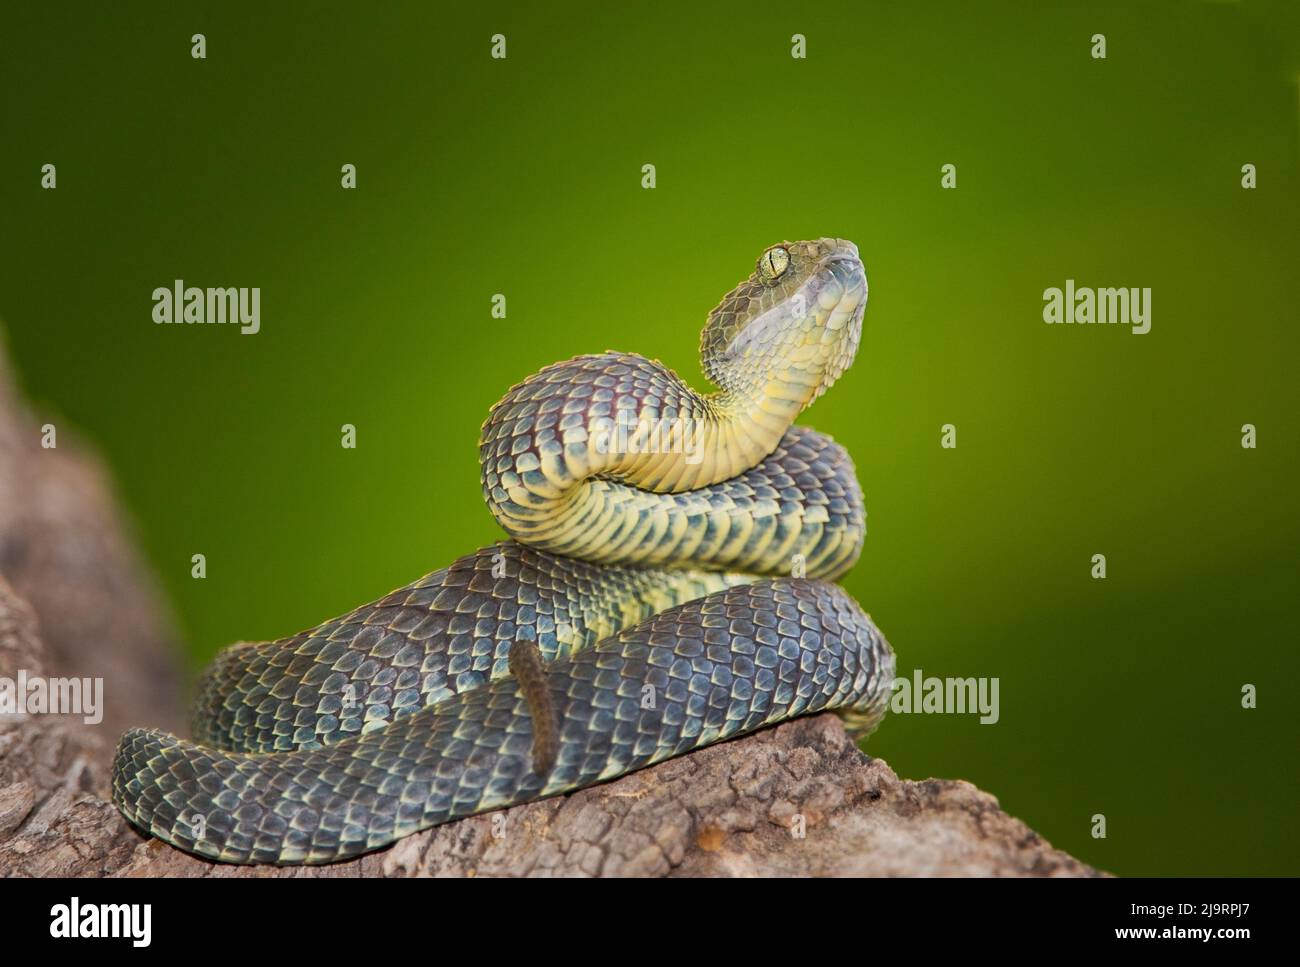 Variable Bush Viper snake - Atheris Squamigera [3840x2160] : r/wallpaper